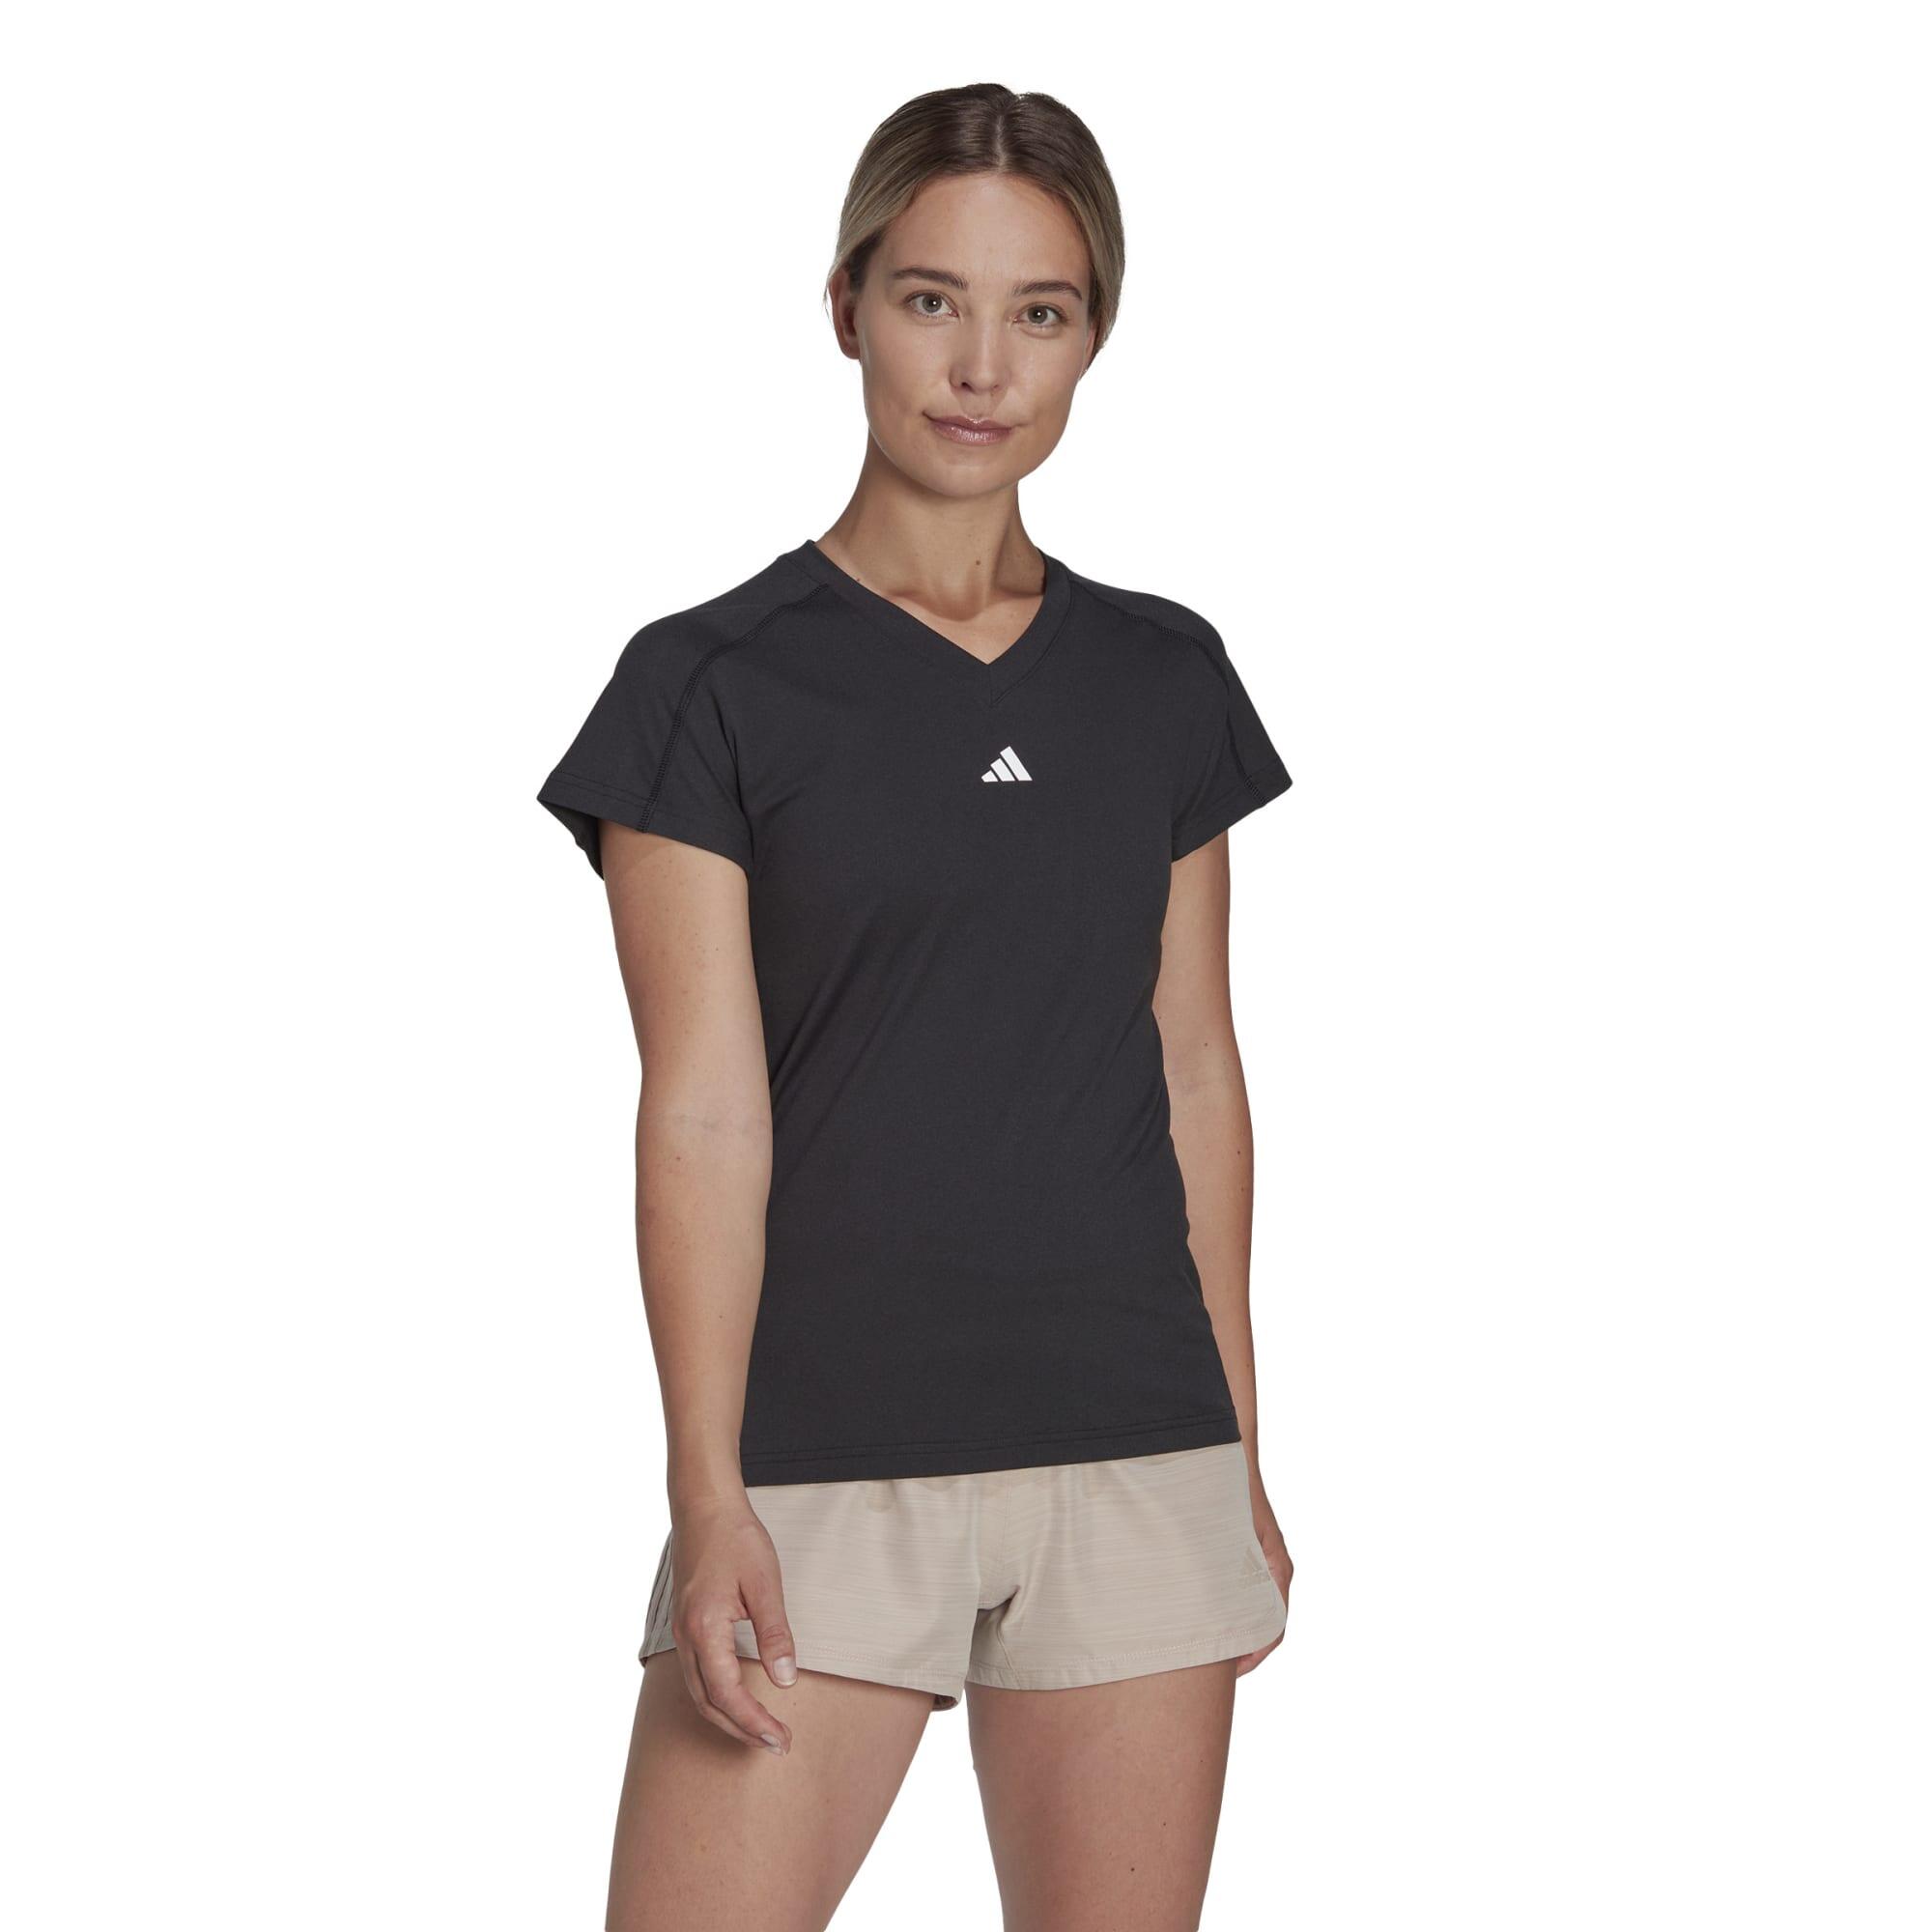 Women's Cardio Fitness T-Shirt - Black 1/5